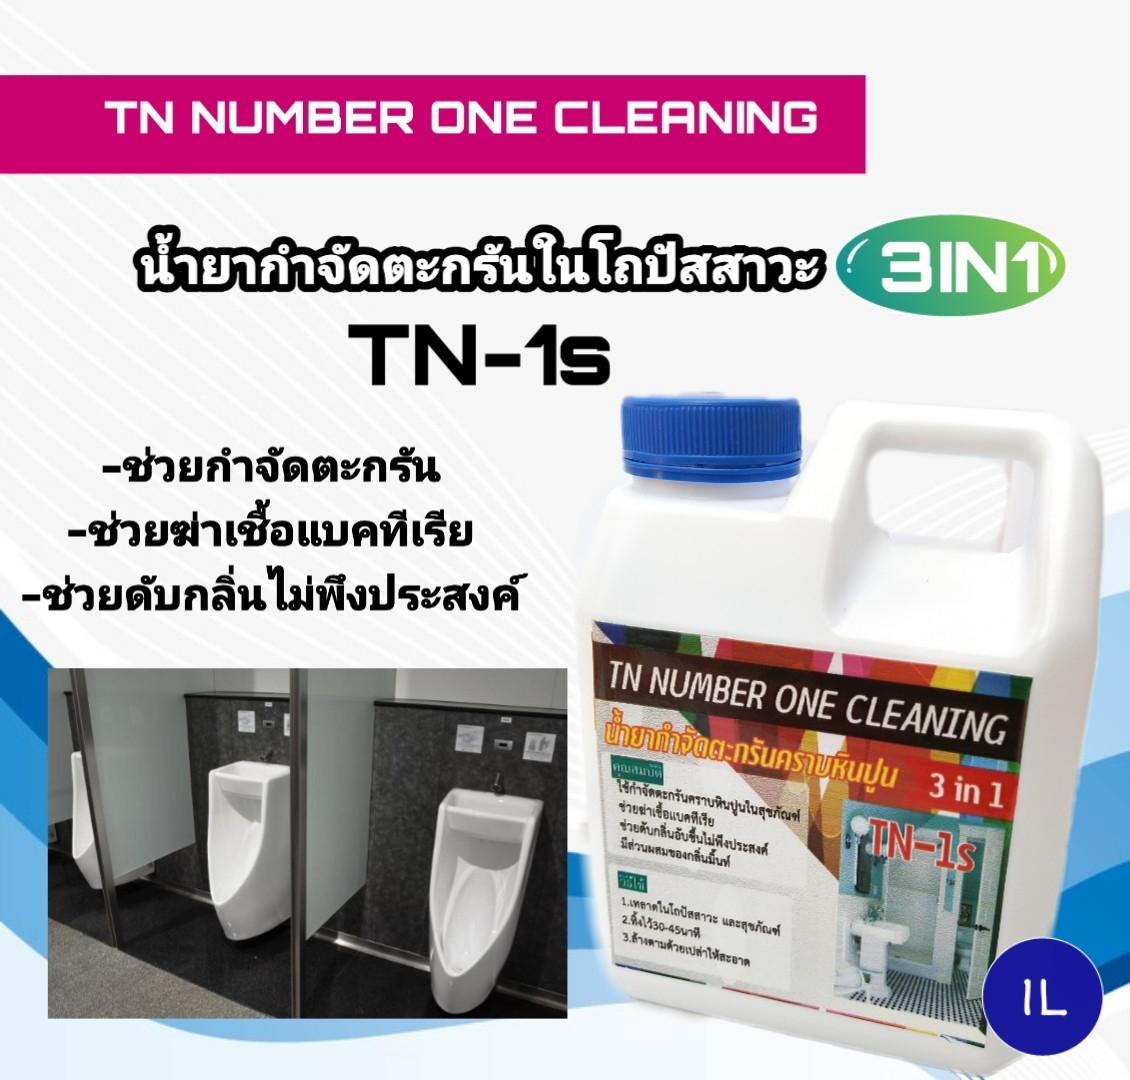 TN-1s น้ำยากำจัดตะกรันในโถปัสสาวะ3in1 ช่วยทำความสะอาด ช่วยฆ่าเชื้อแบคทีเรีย ช่วยดับกลิ่นไม่พึงประสงค์